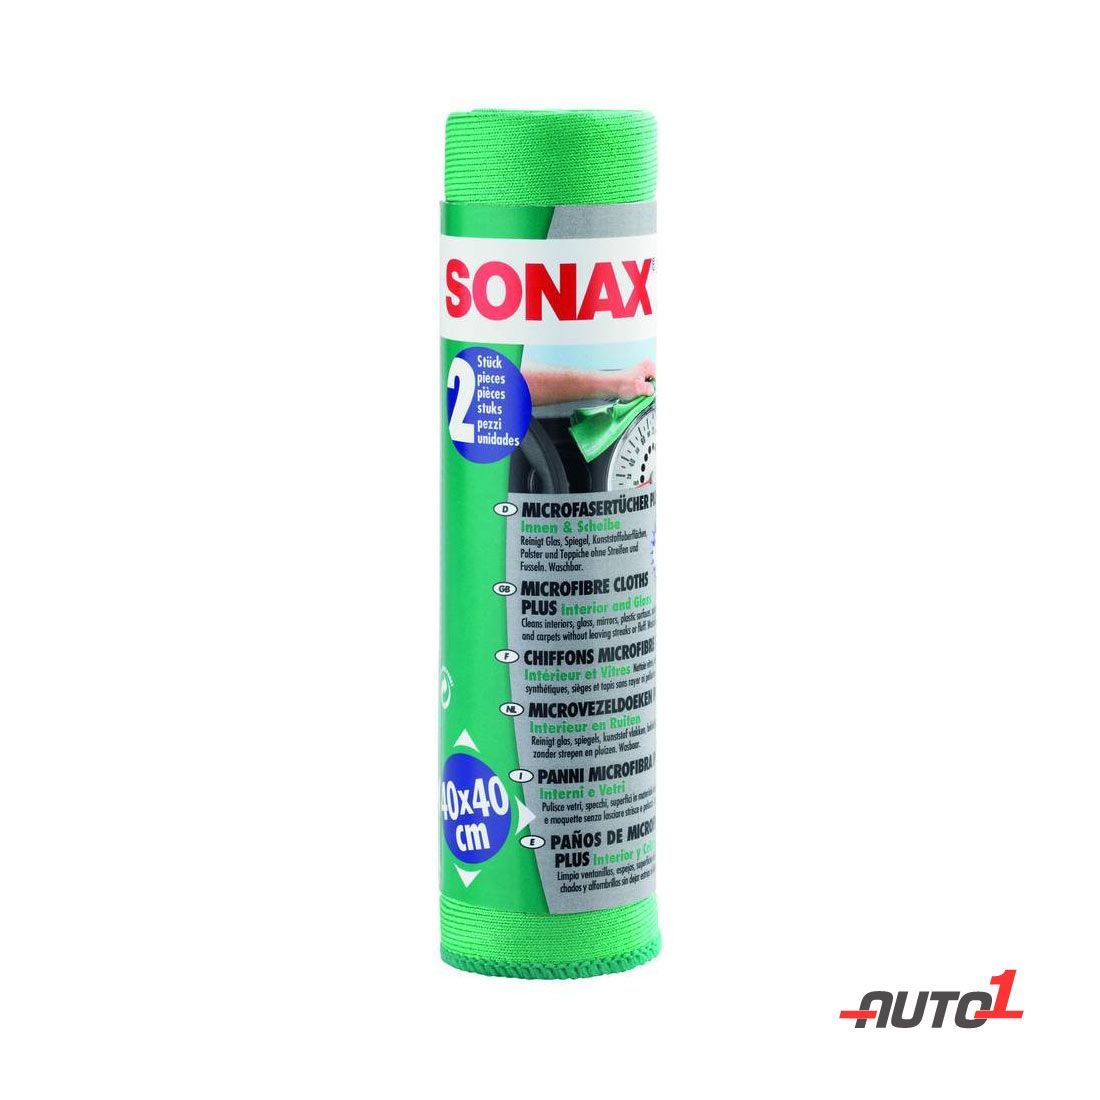 Sonax Microfiber Cloth Plus Interior & Glass